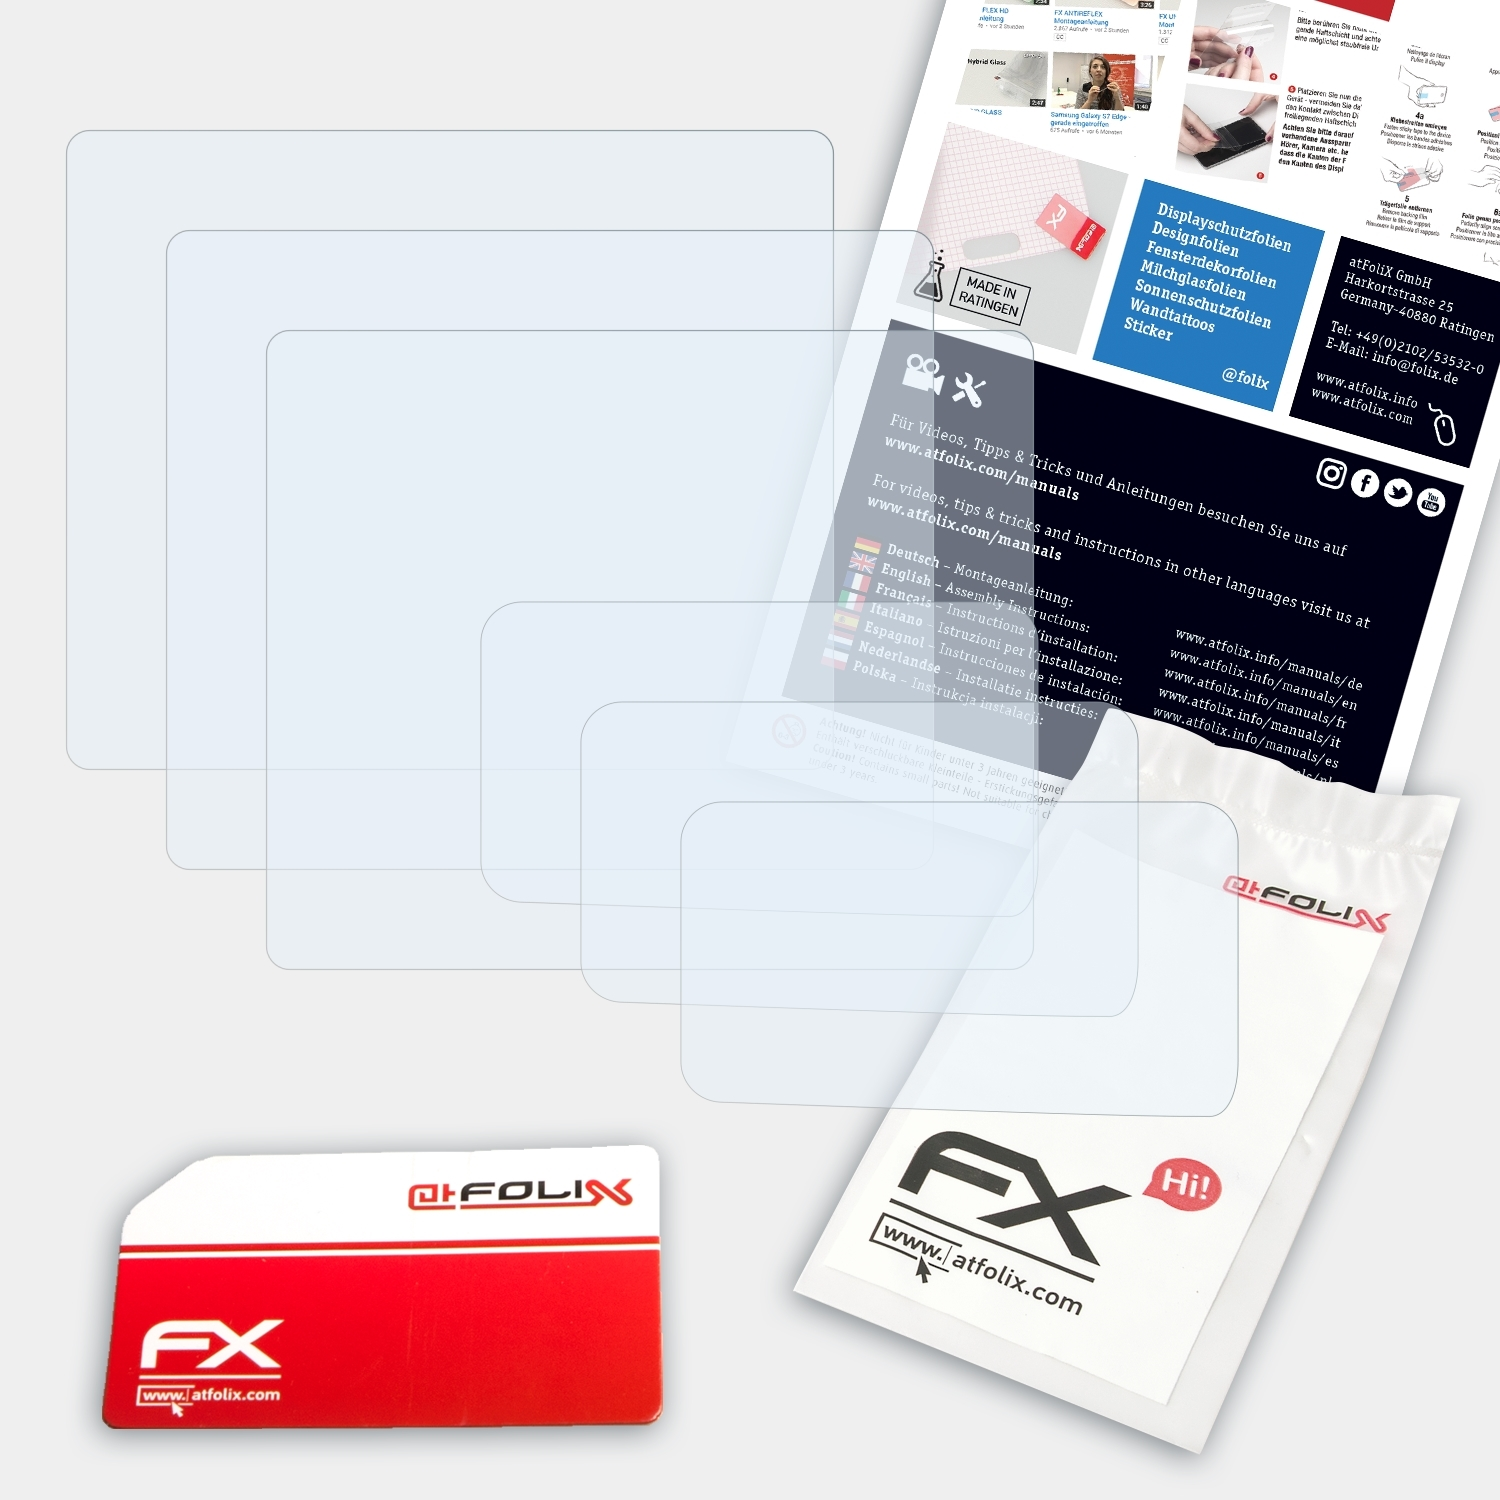 ATFOLIX 3x FX-Clear Displayschutz(für Pentax K10D)